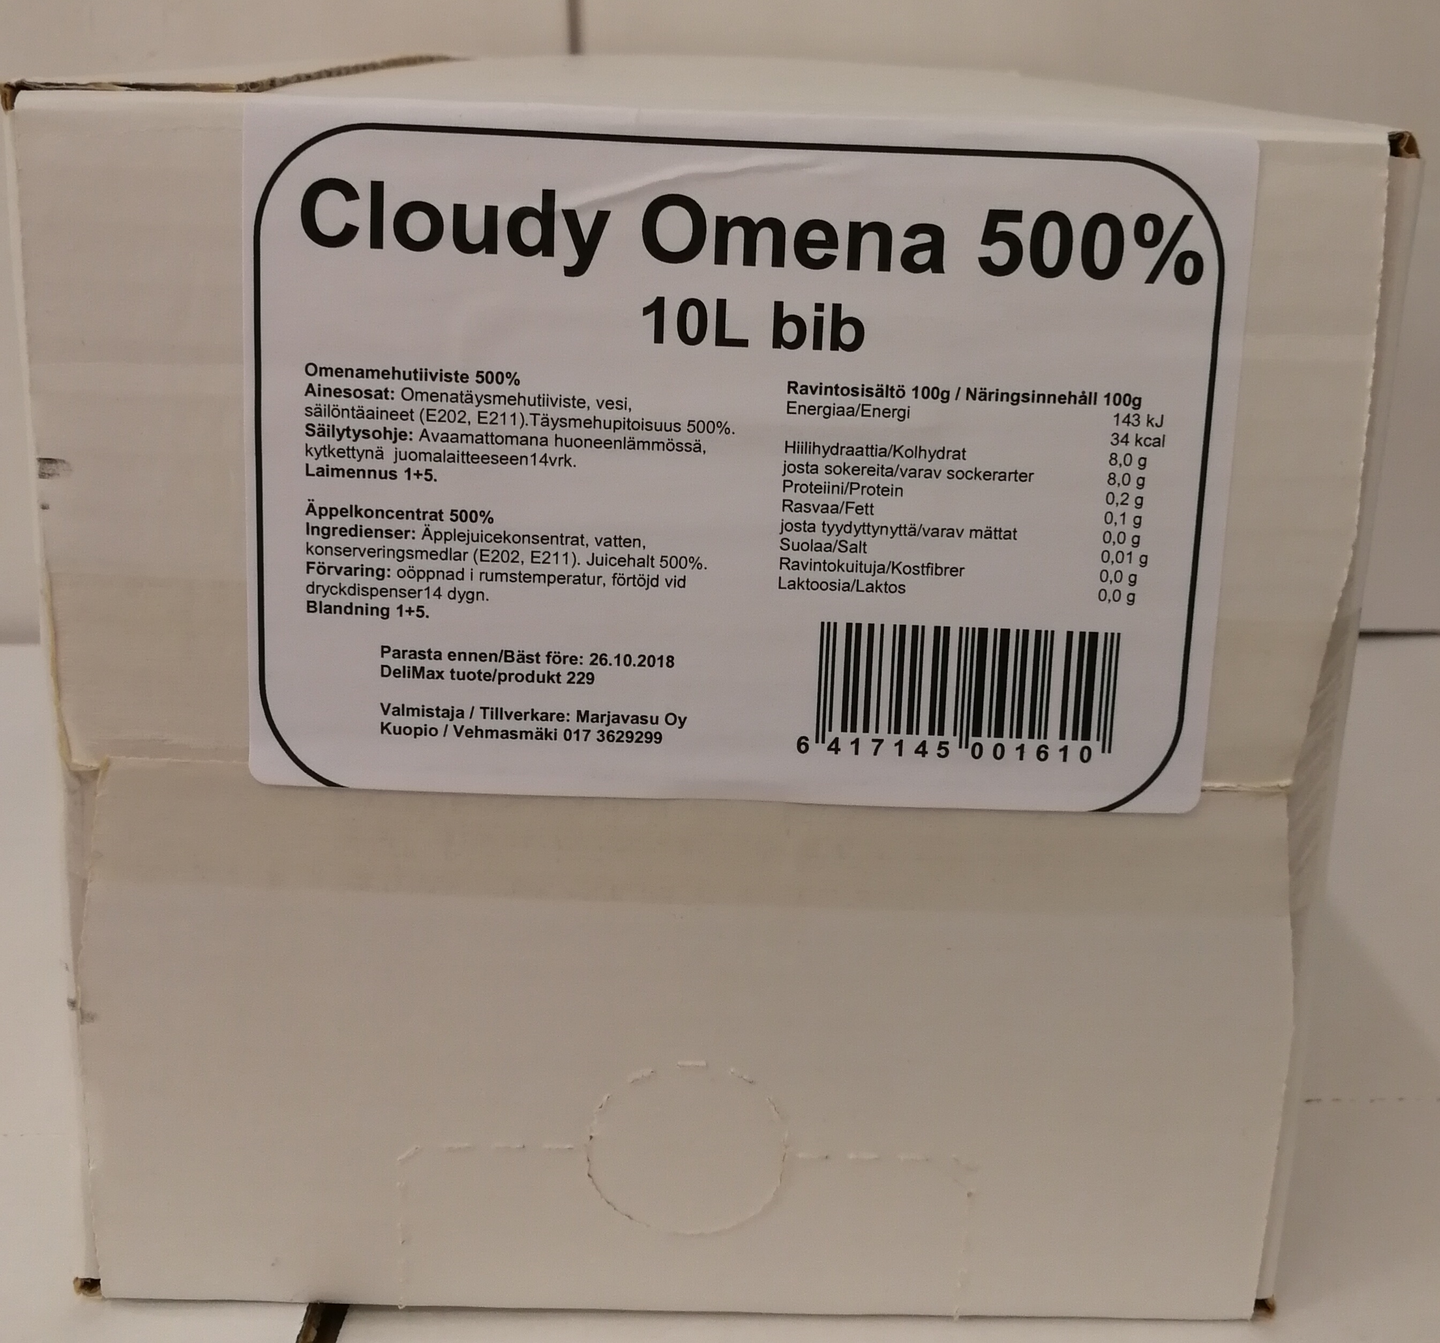 DeliMax Cloudy Omenamehutiiviste 500% 10l 1+4-5 bib automaattiin